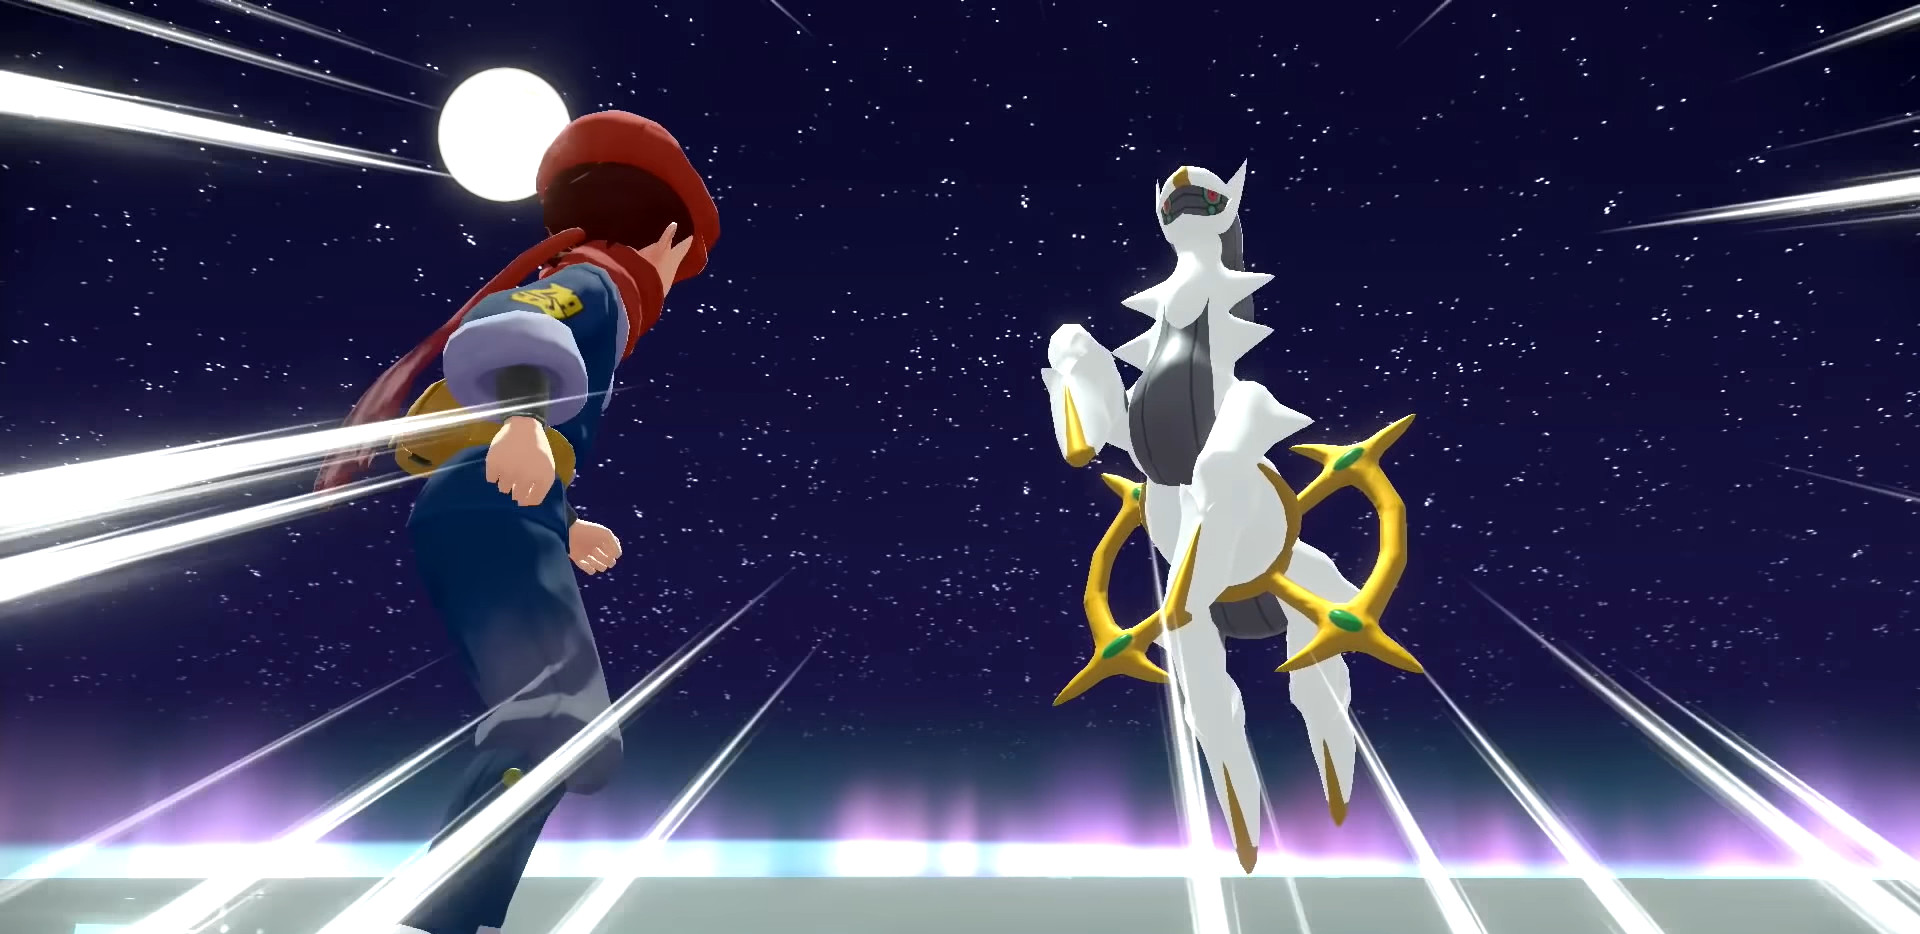 Event] Pokémon Sword and Pokémon Shield! - Super Smash Bros. Ultimate